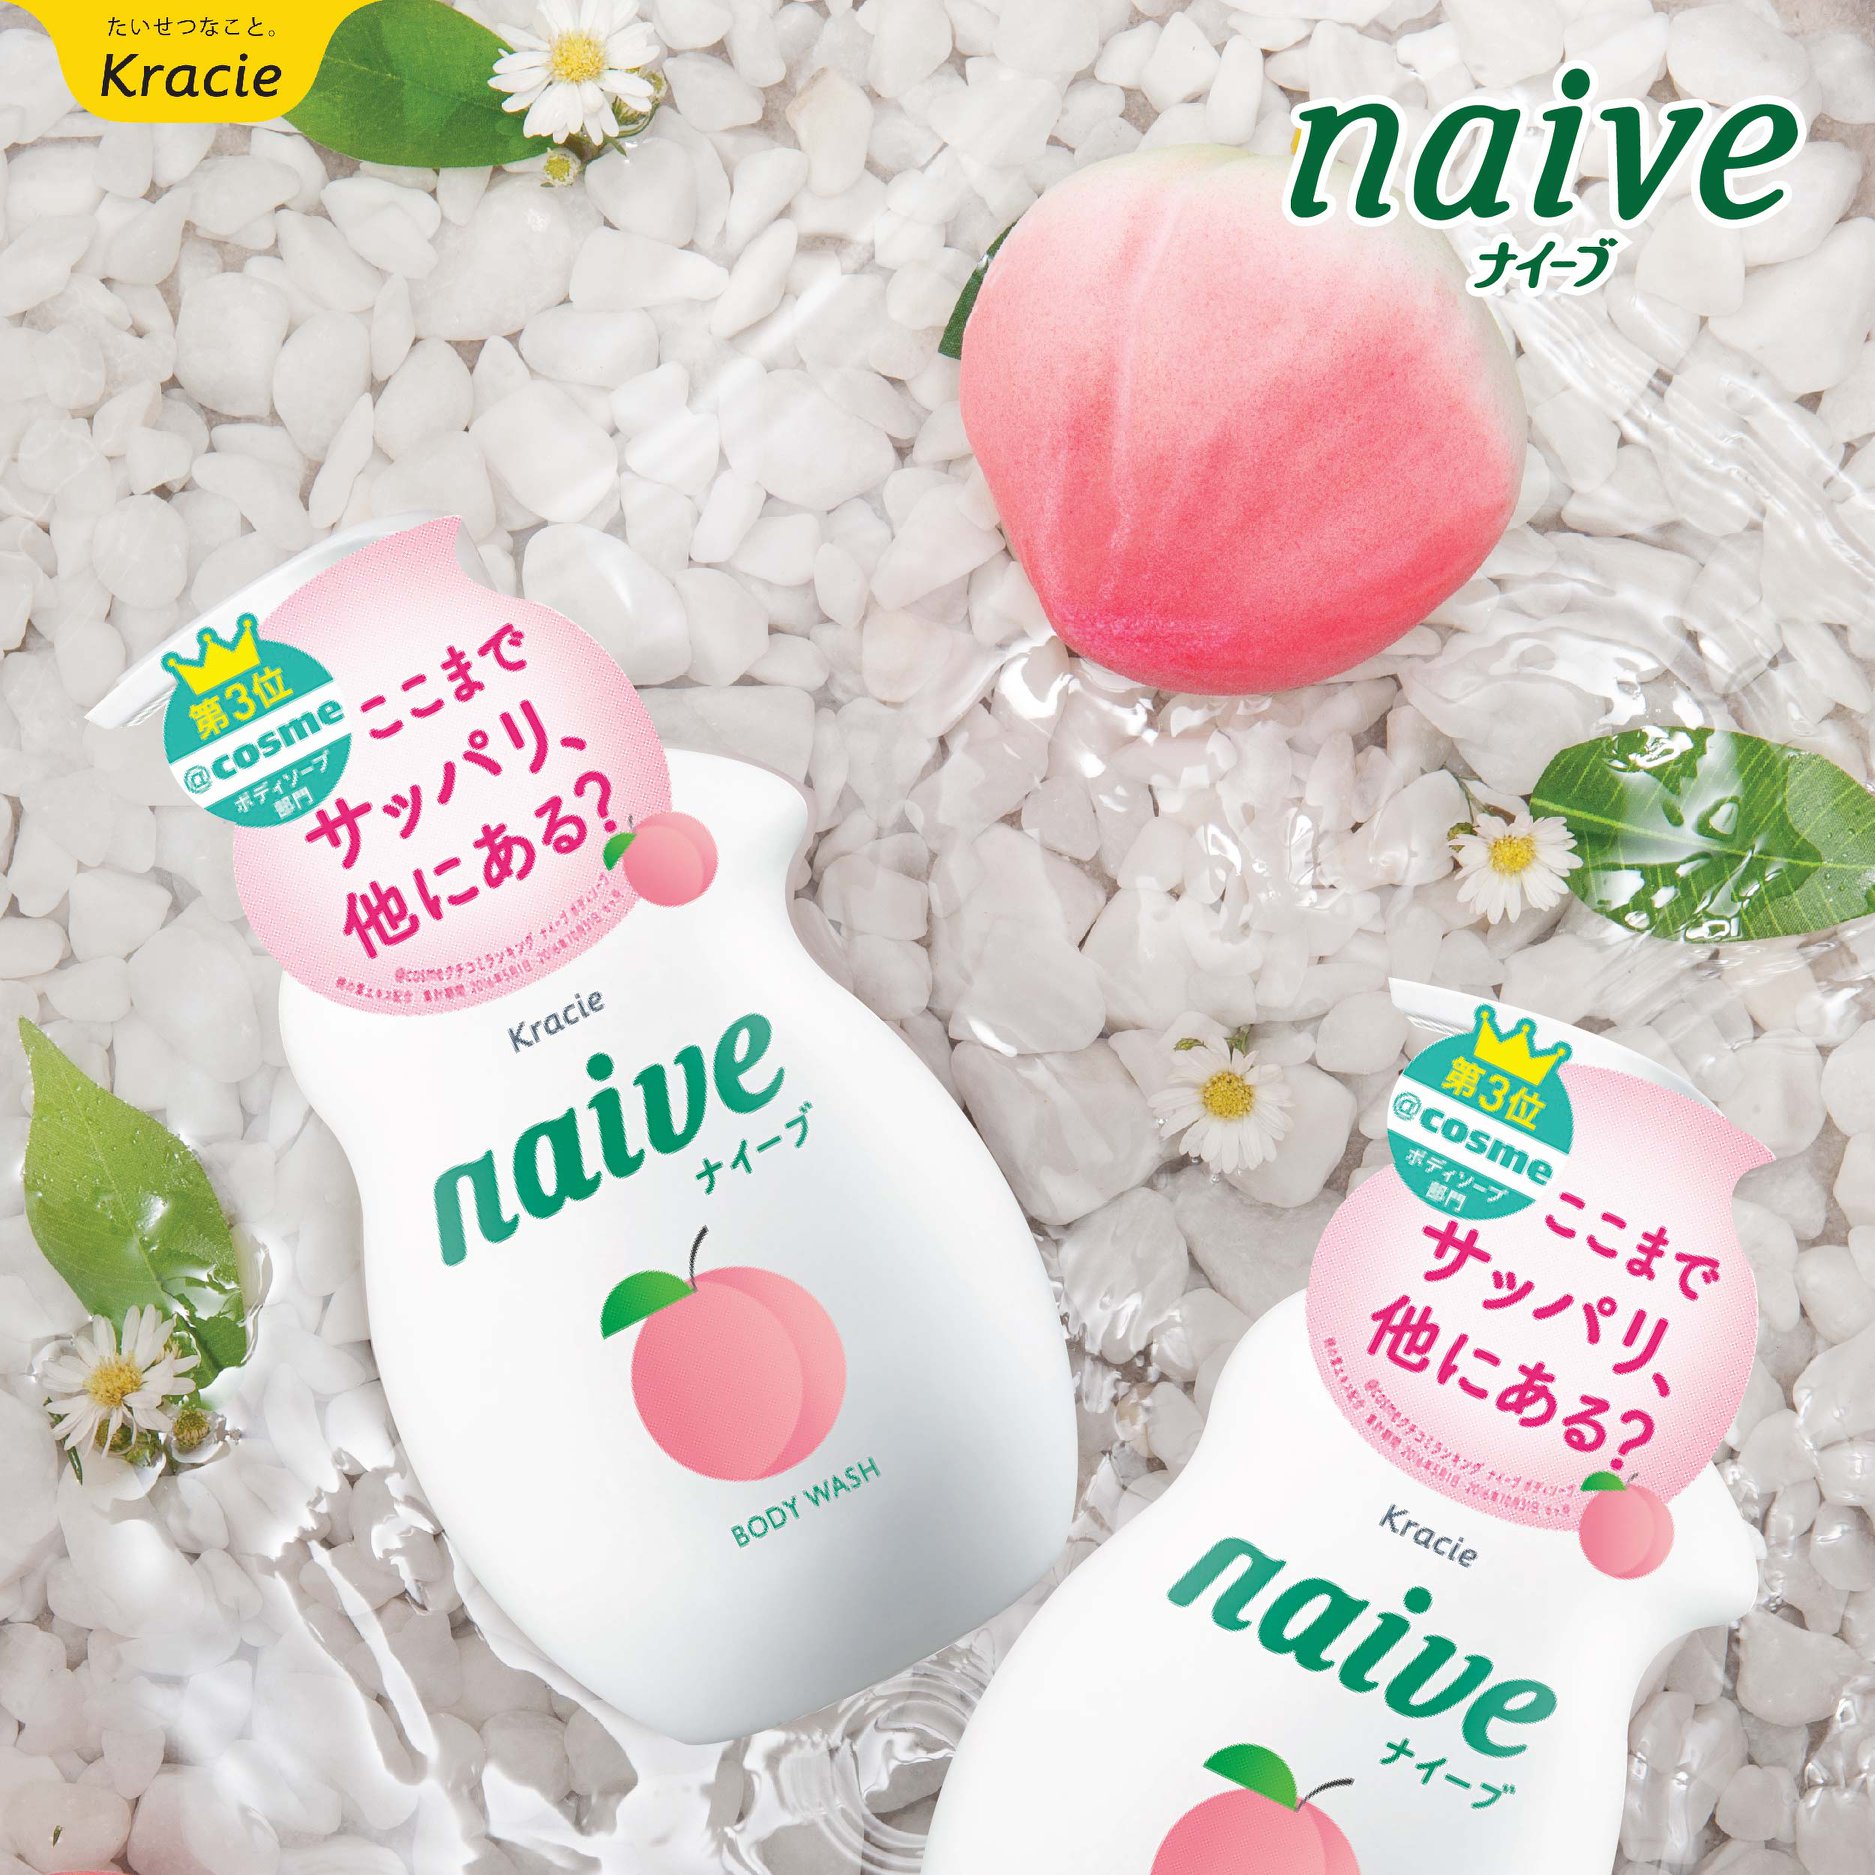 Sữa Tắm Chiết Xuất Từ Lá Đào Kracie Naive Body Wash( Peach Leaf) 530ml